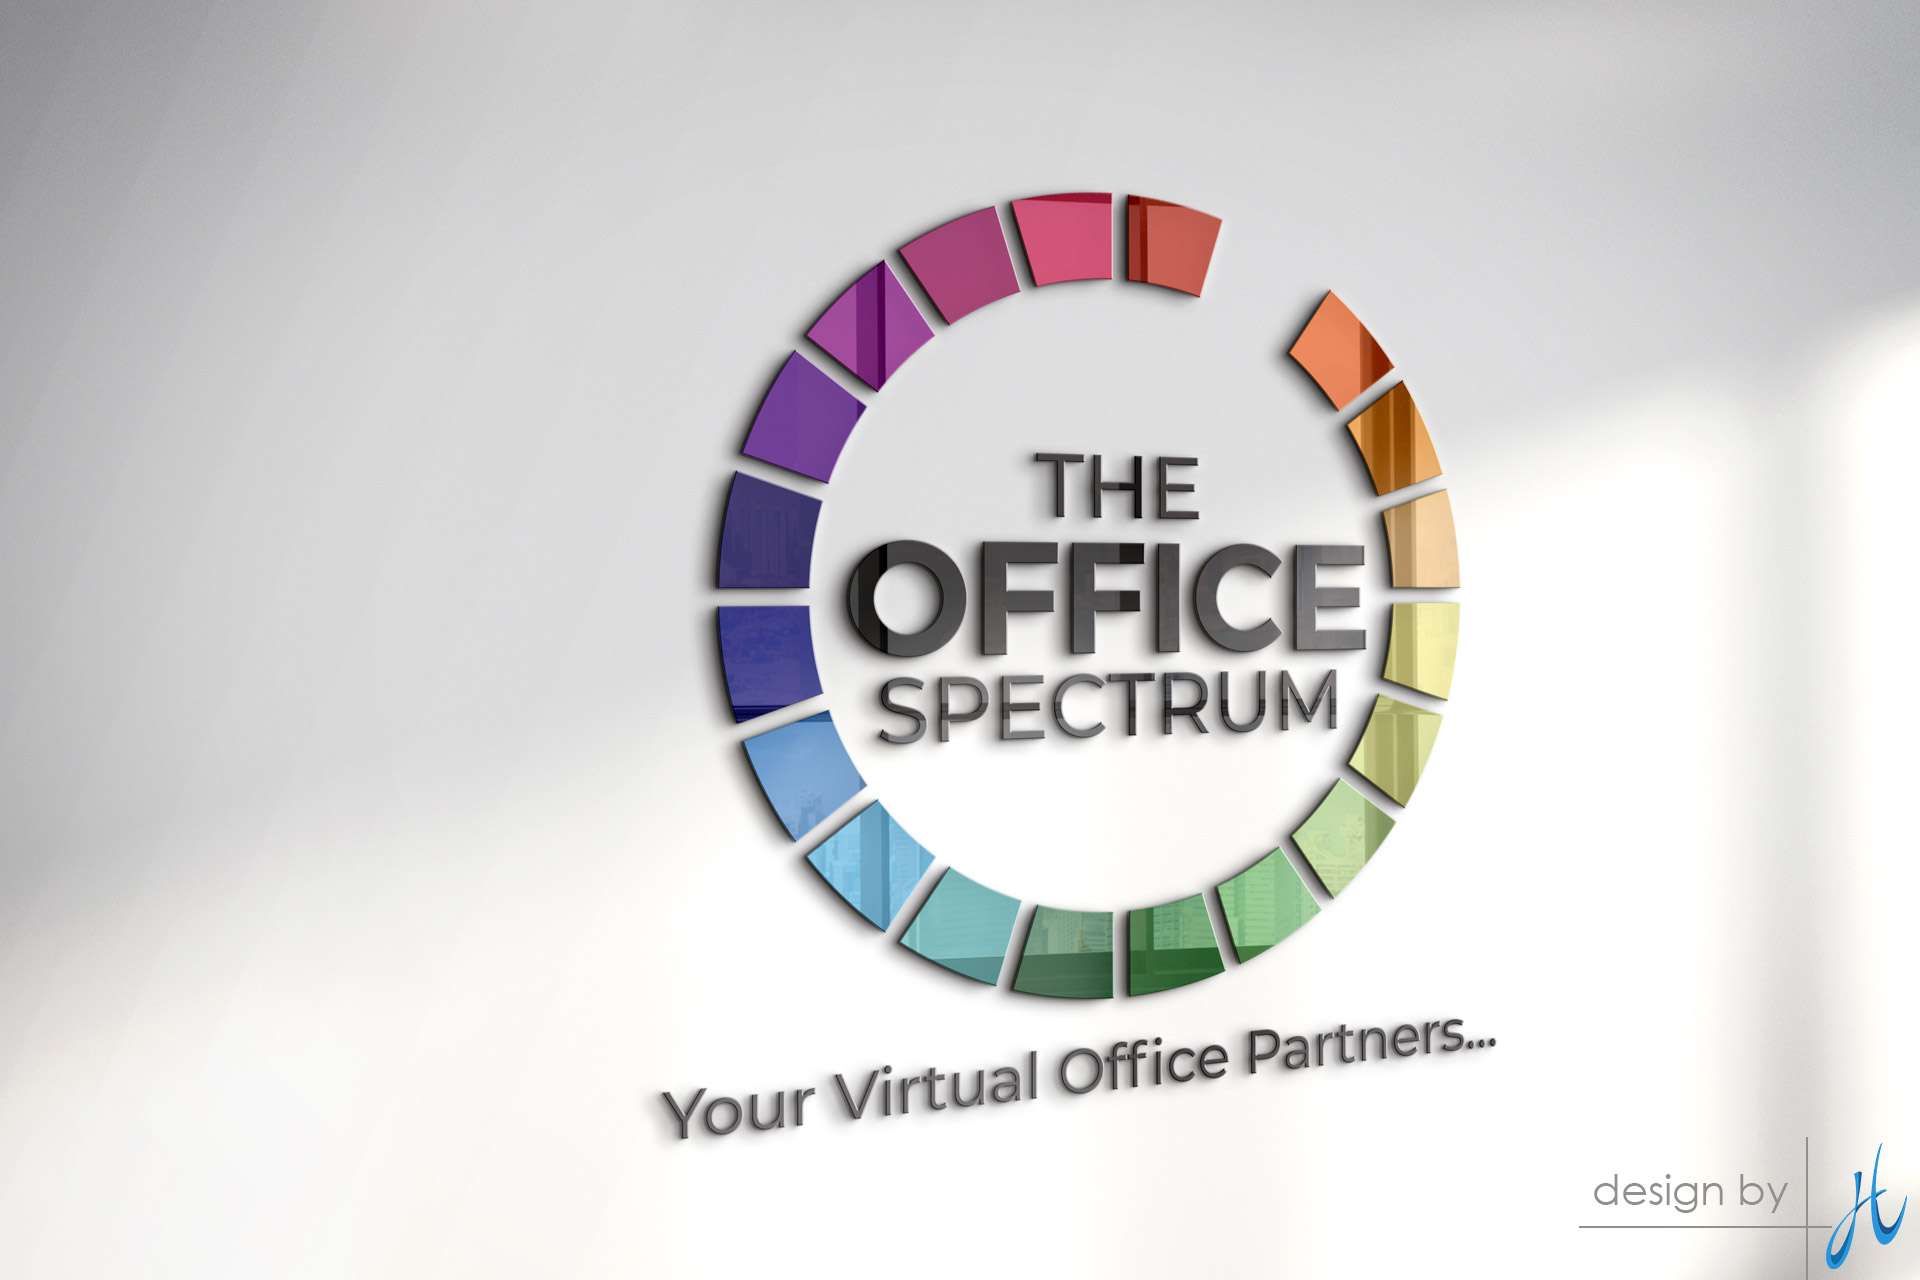 The Office Spectrum